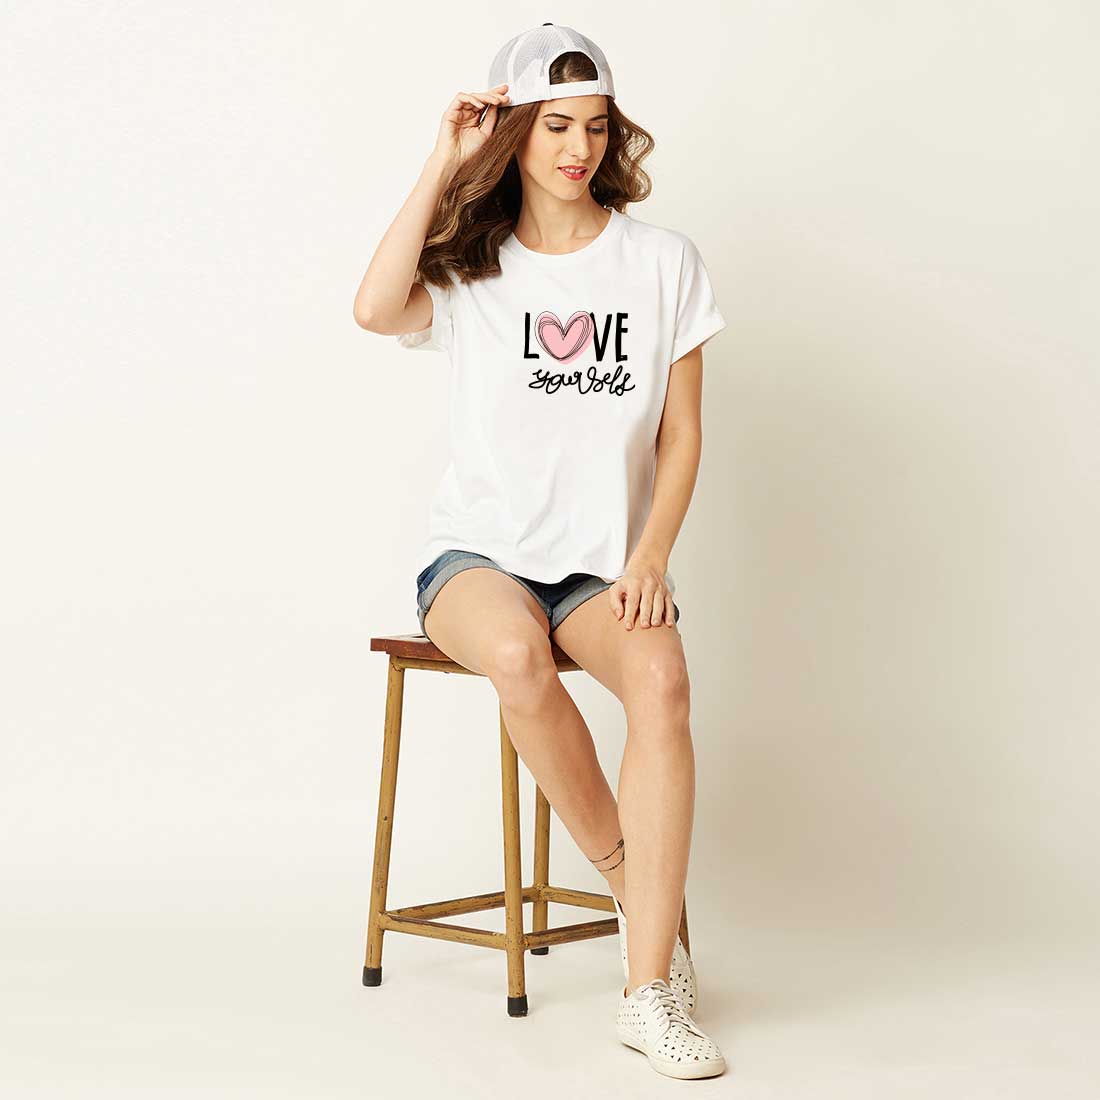 Love Yourself White Women T-Shirt